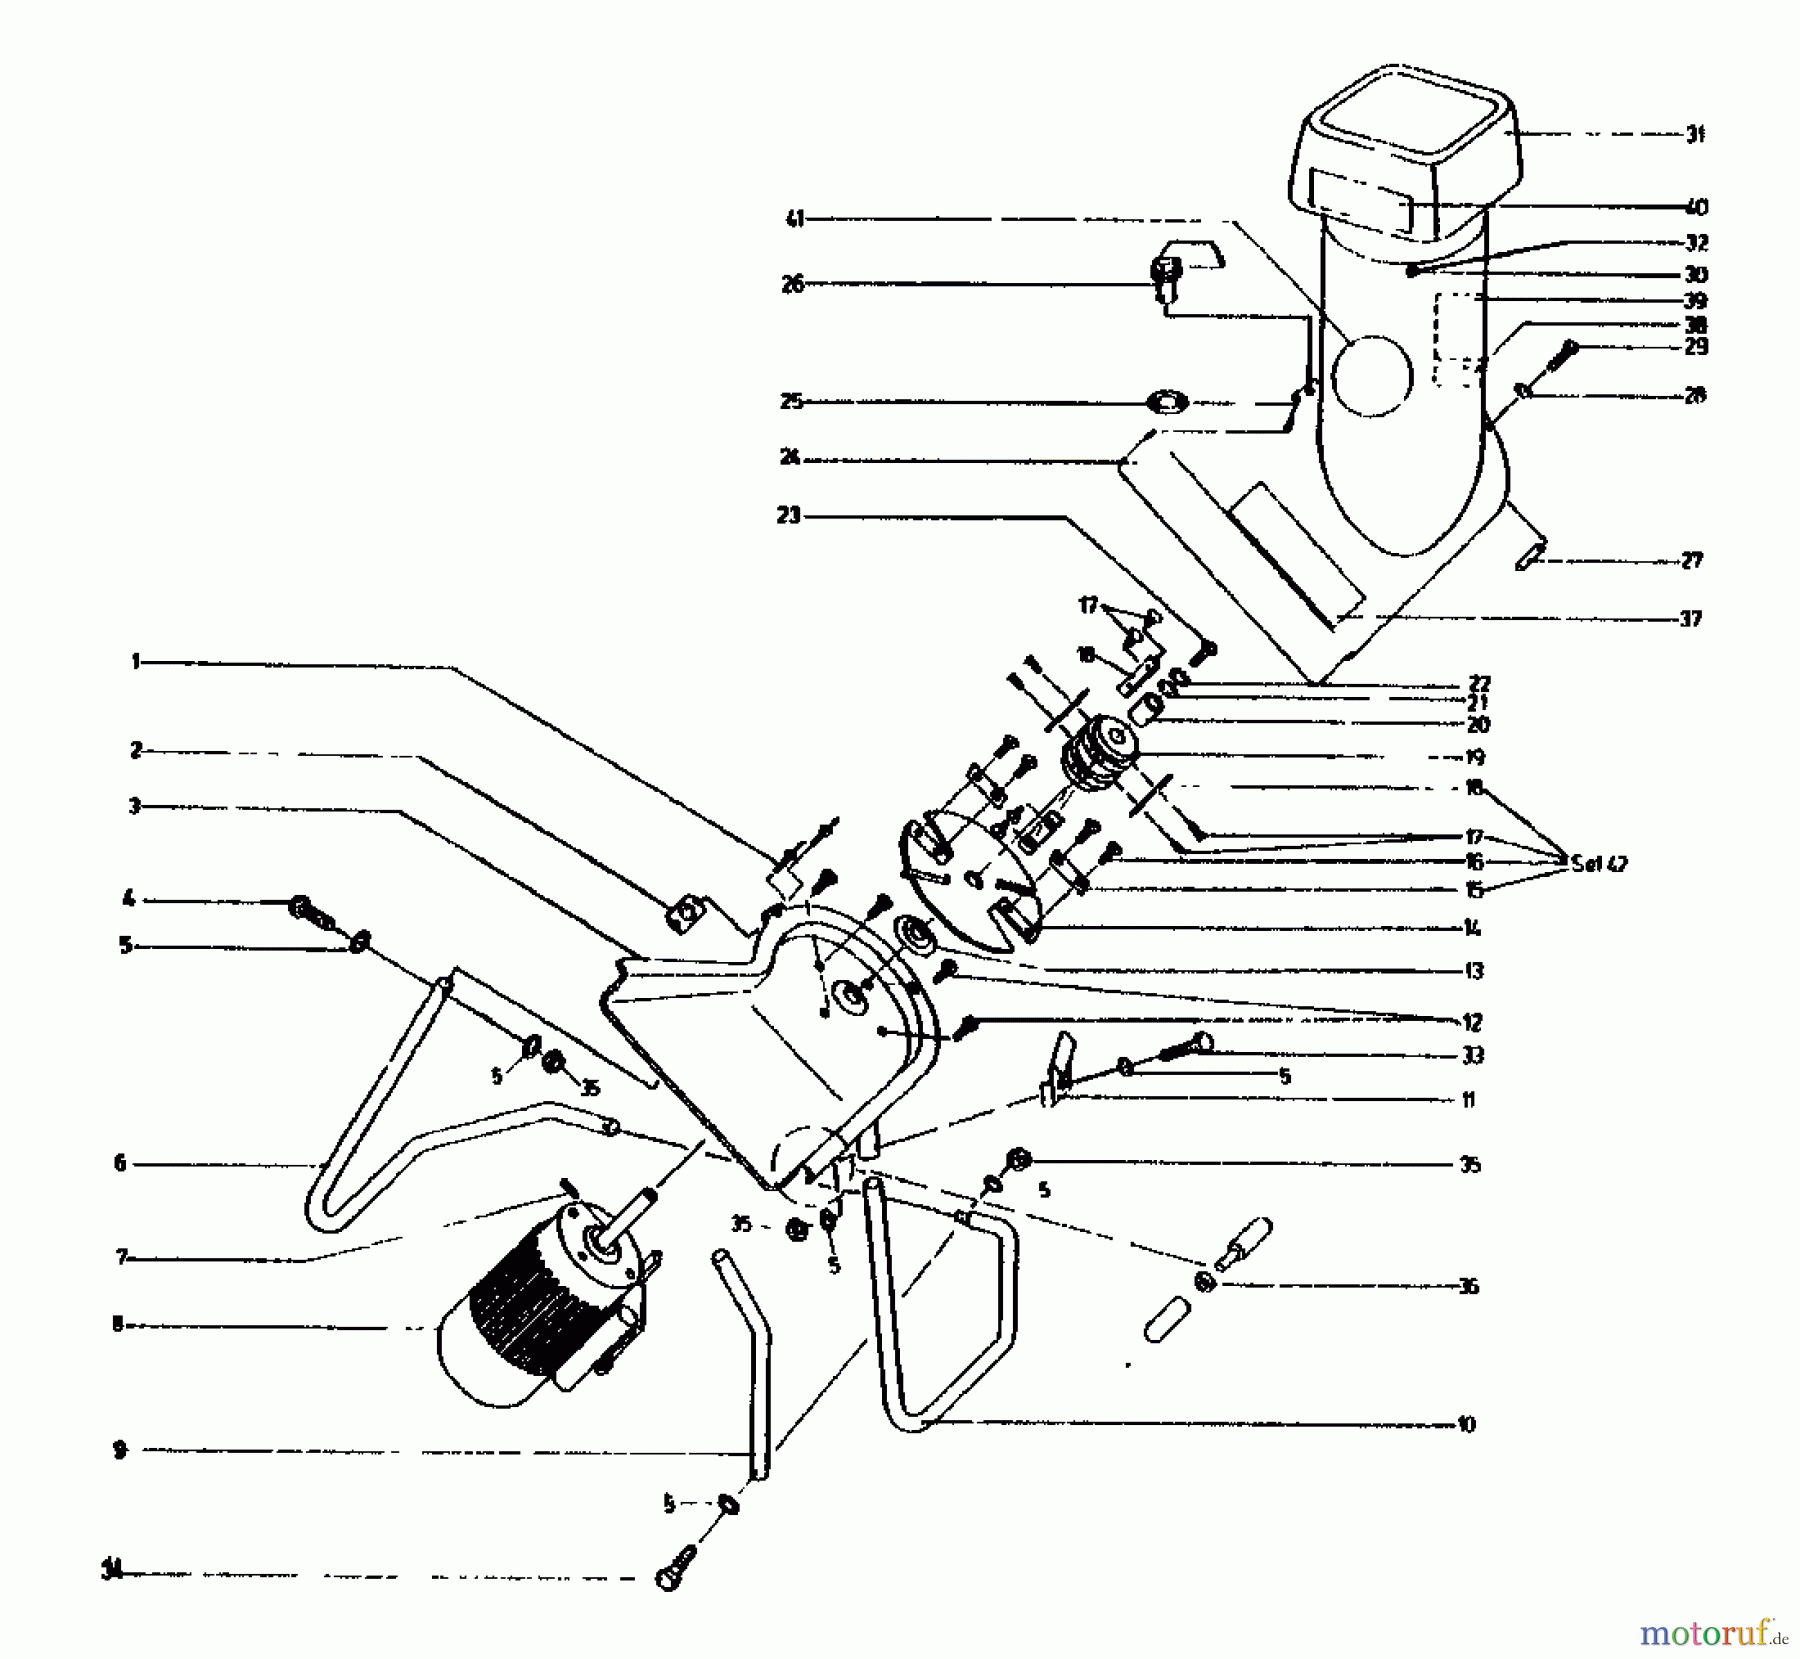  Gutbrod Chipper GAE 18 04002.04  (1991) Basic machine